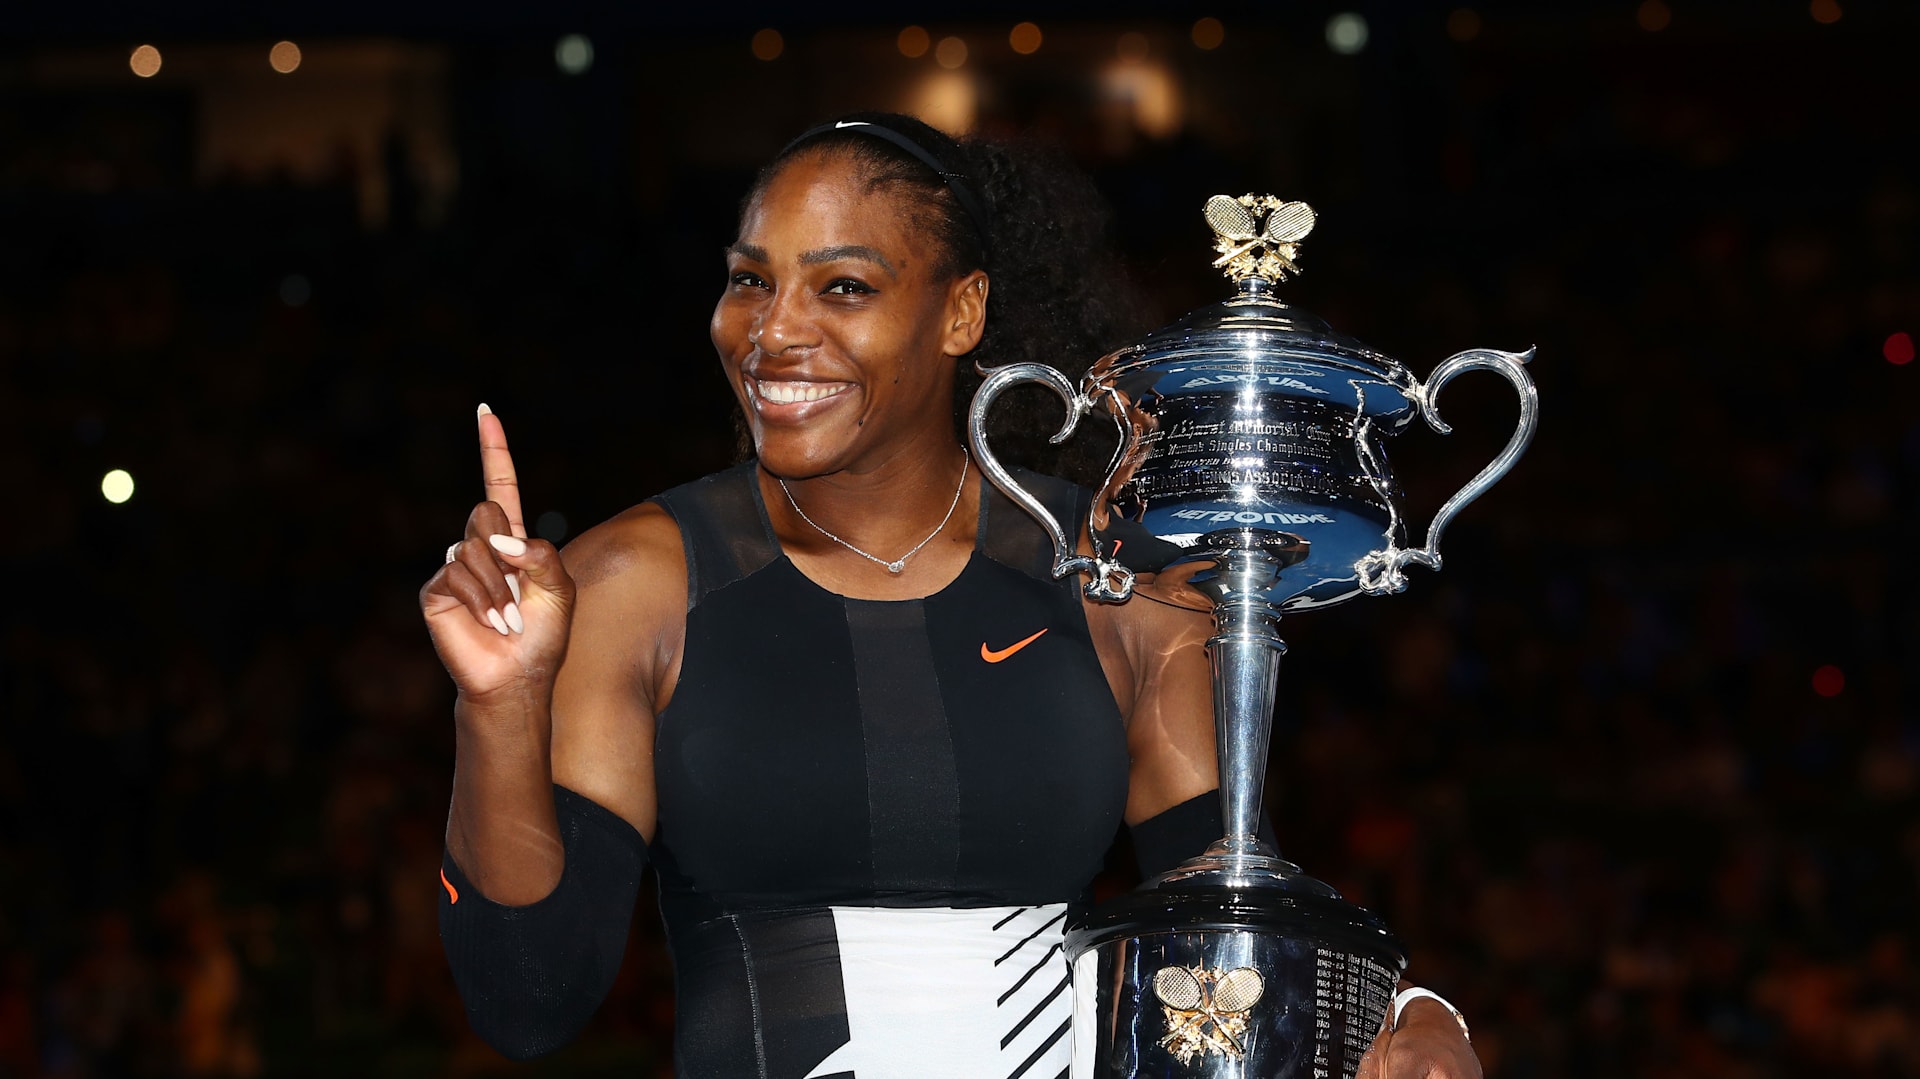 Serena Williams - tennis career statistics and facts